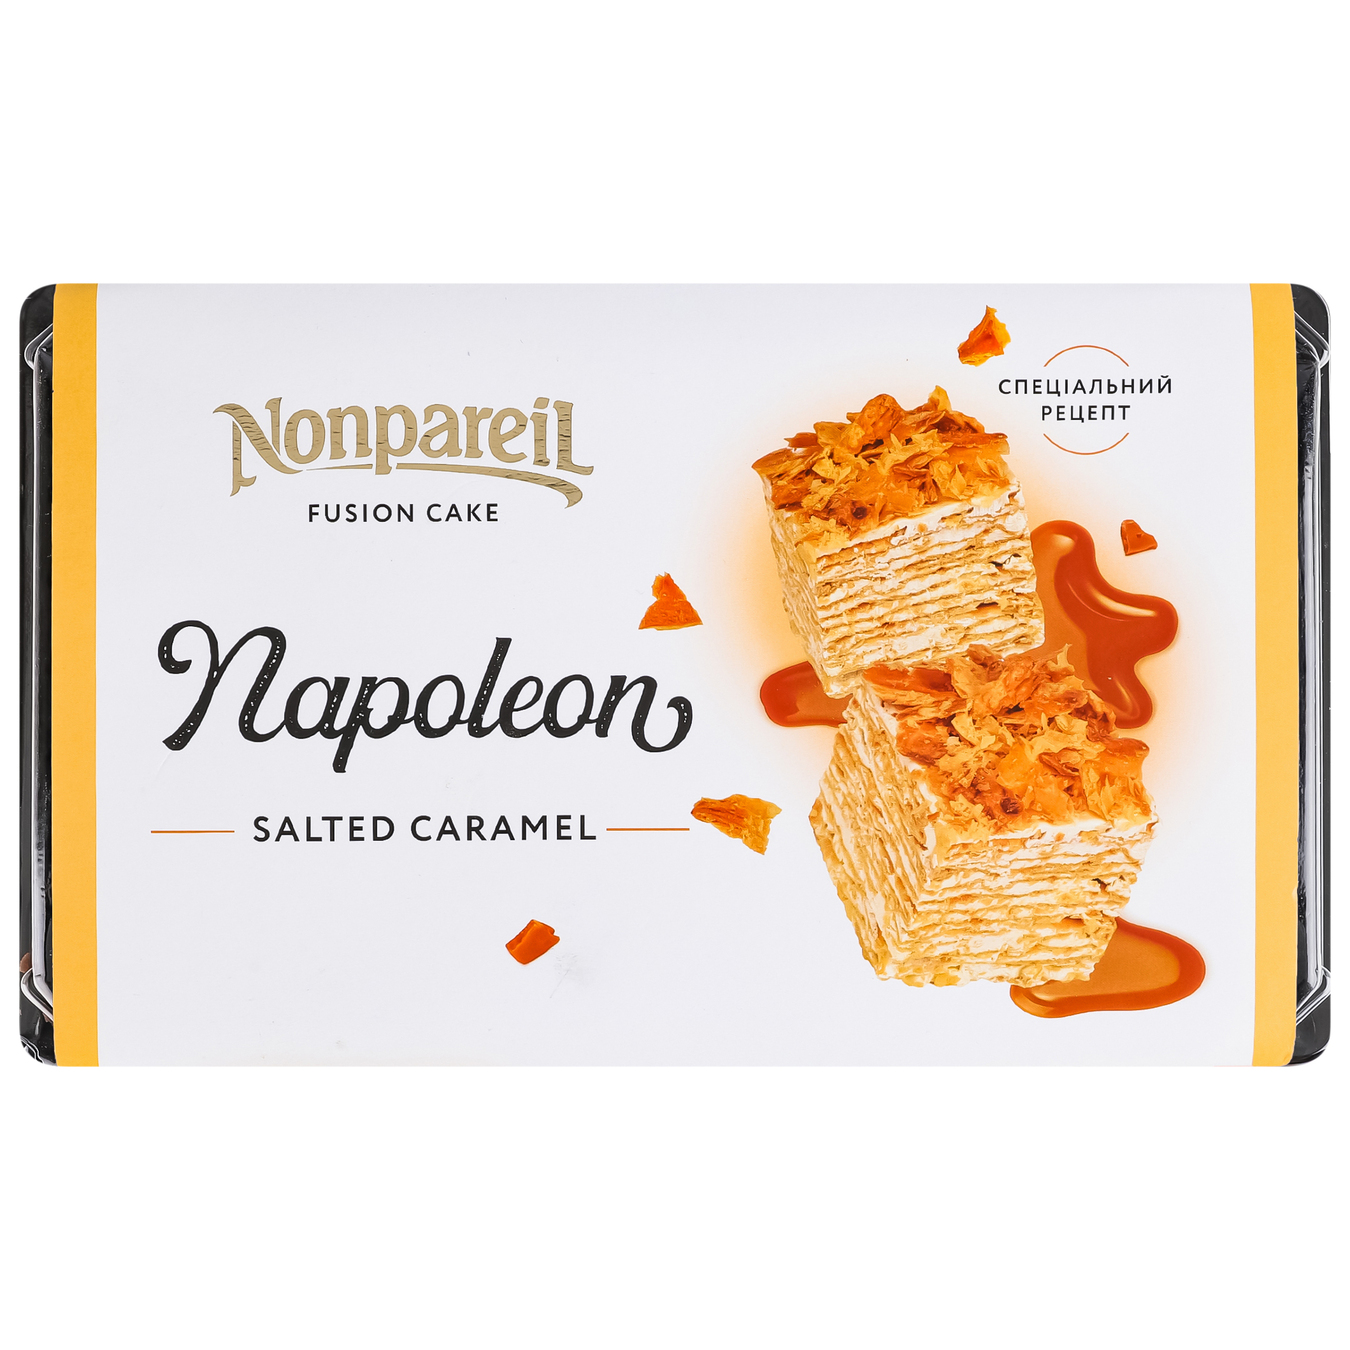 NONPAREIL Napoleon cake with salted caramel 450g